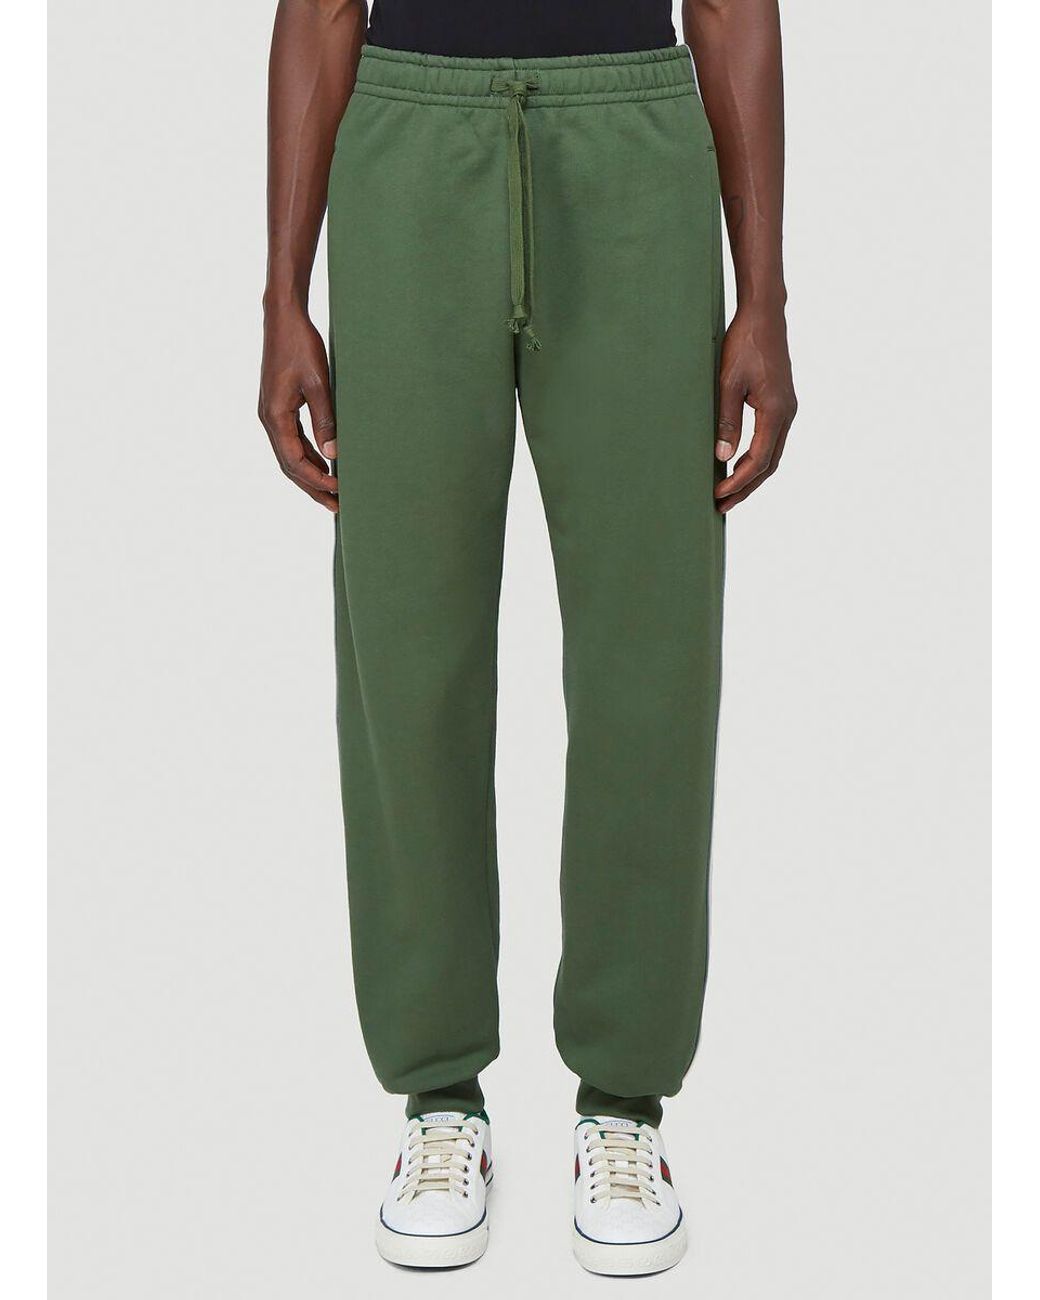 Gucci Cotton Interlocking G Stripe Jogger Pants in Green for Men - Lyst